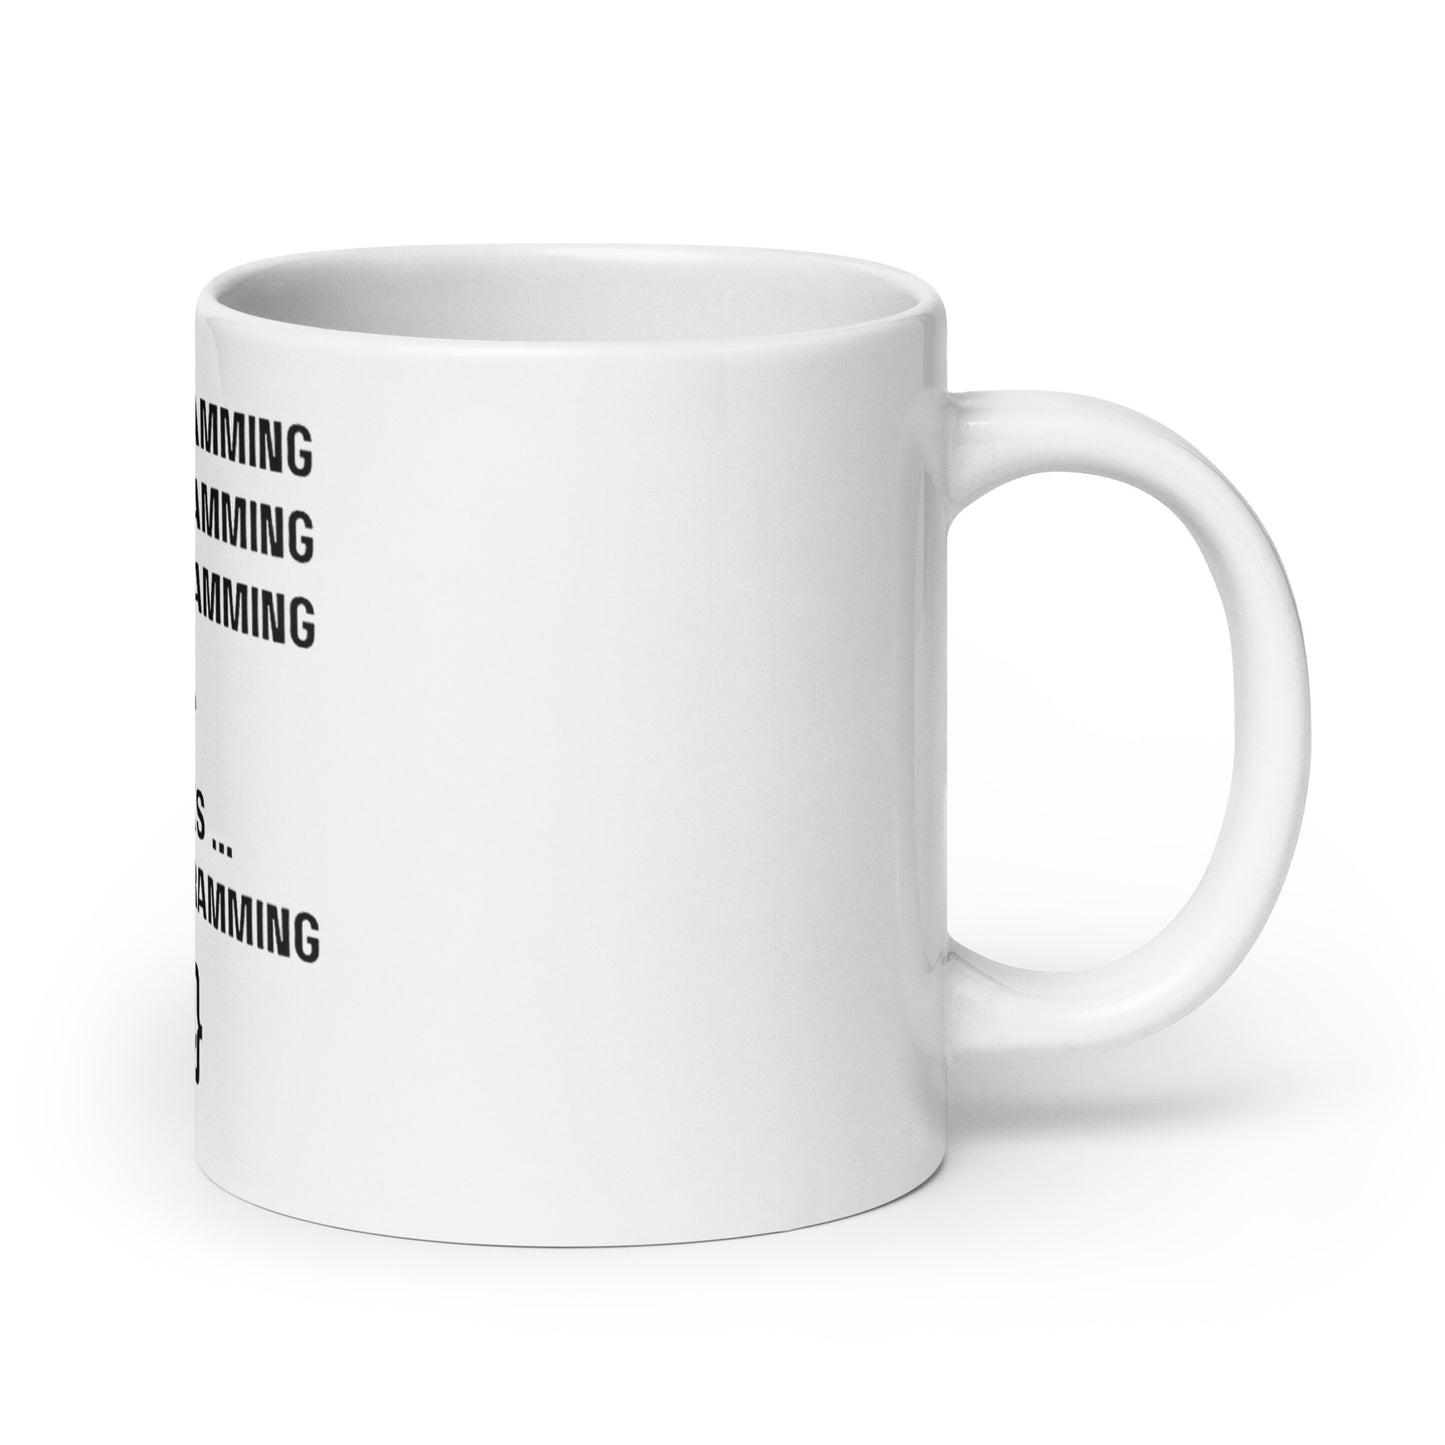 Hate Programming mug